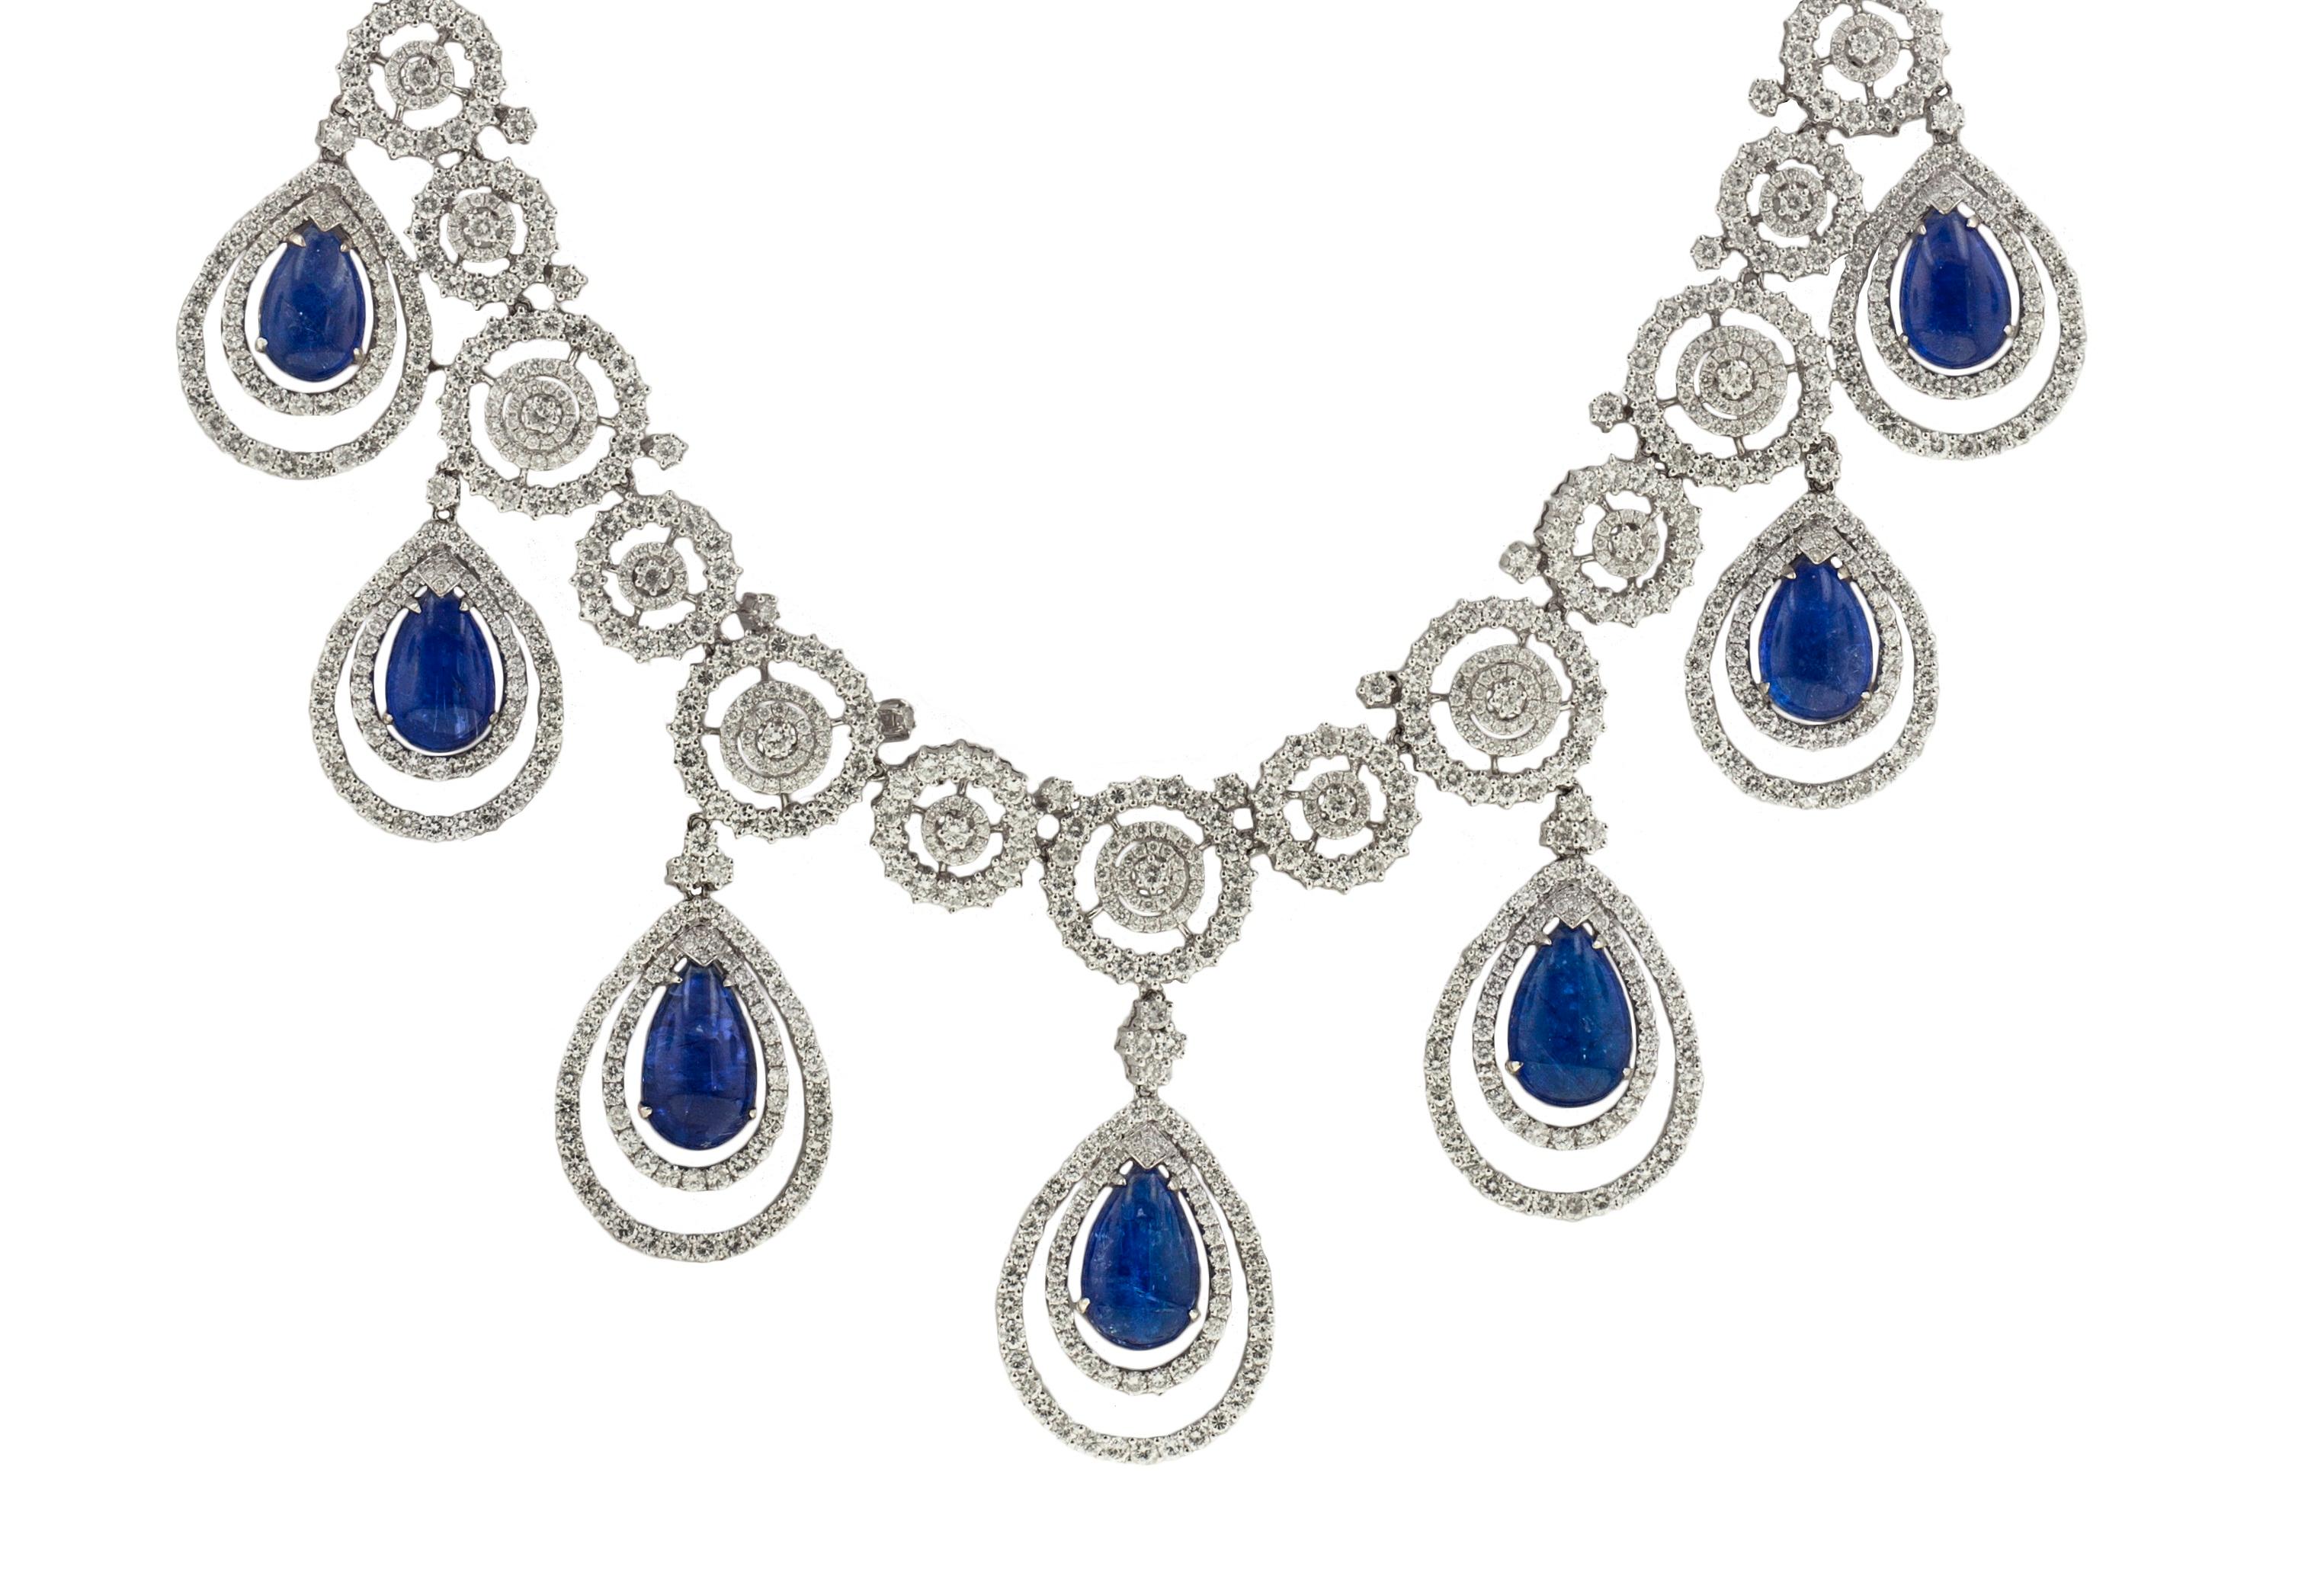 Diamond necklace | High jewelry, Diamond necklace, Necklace